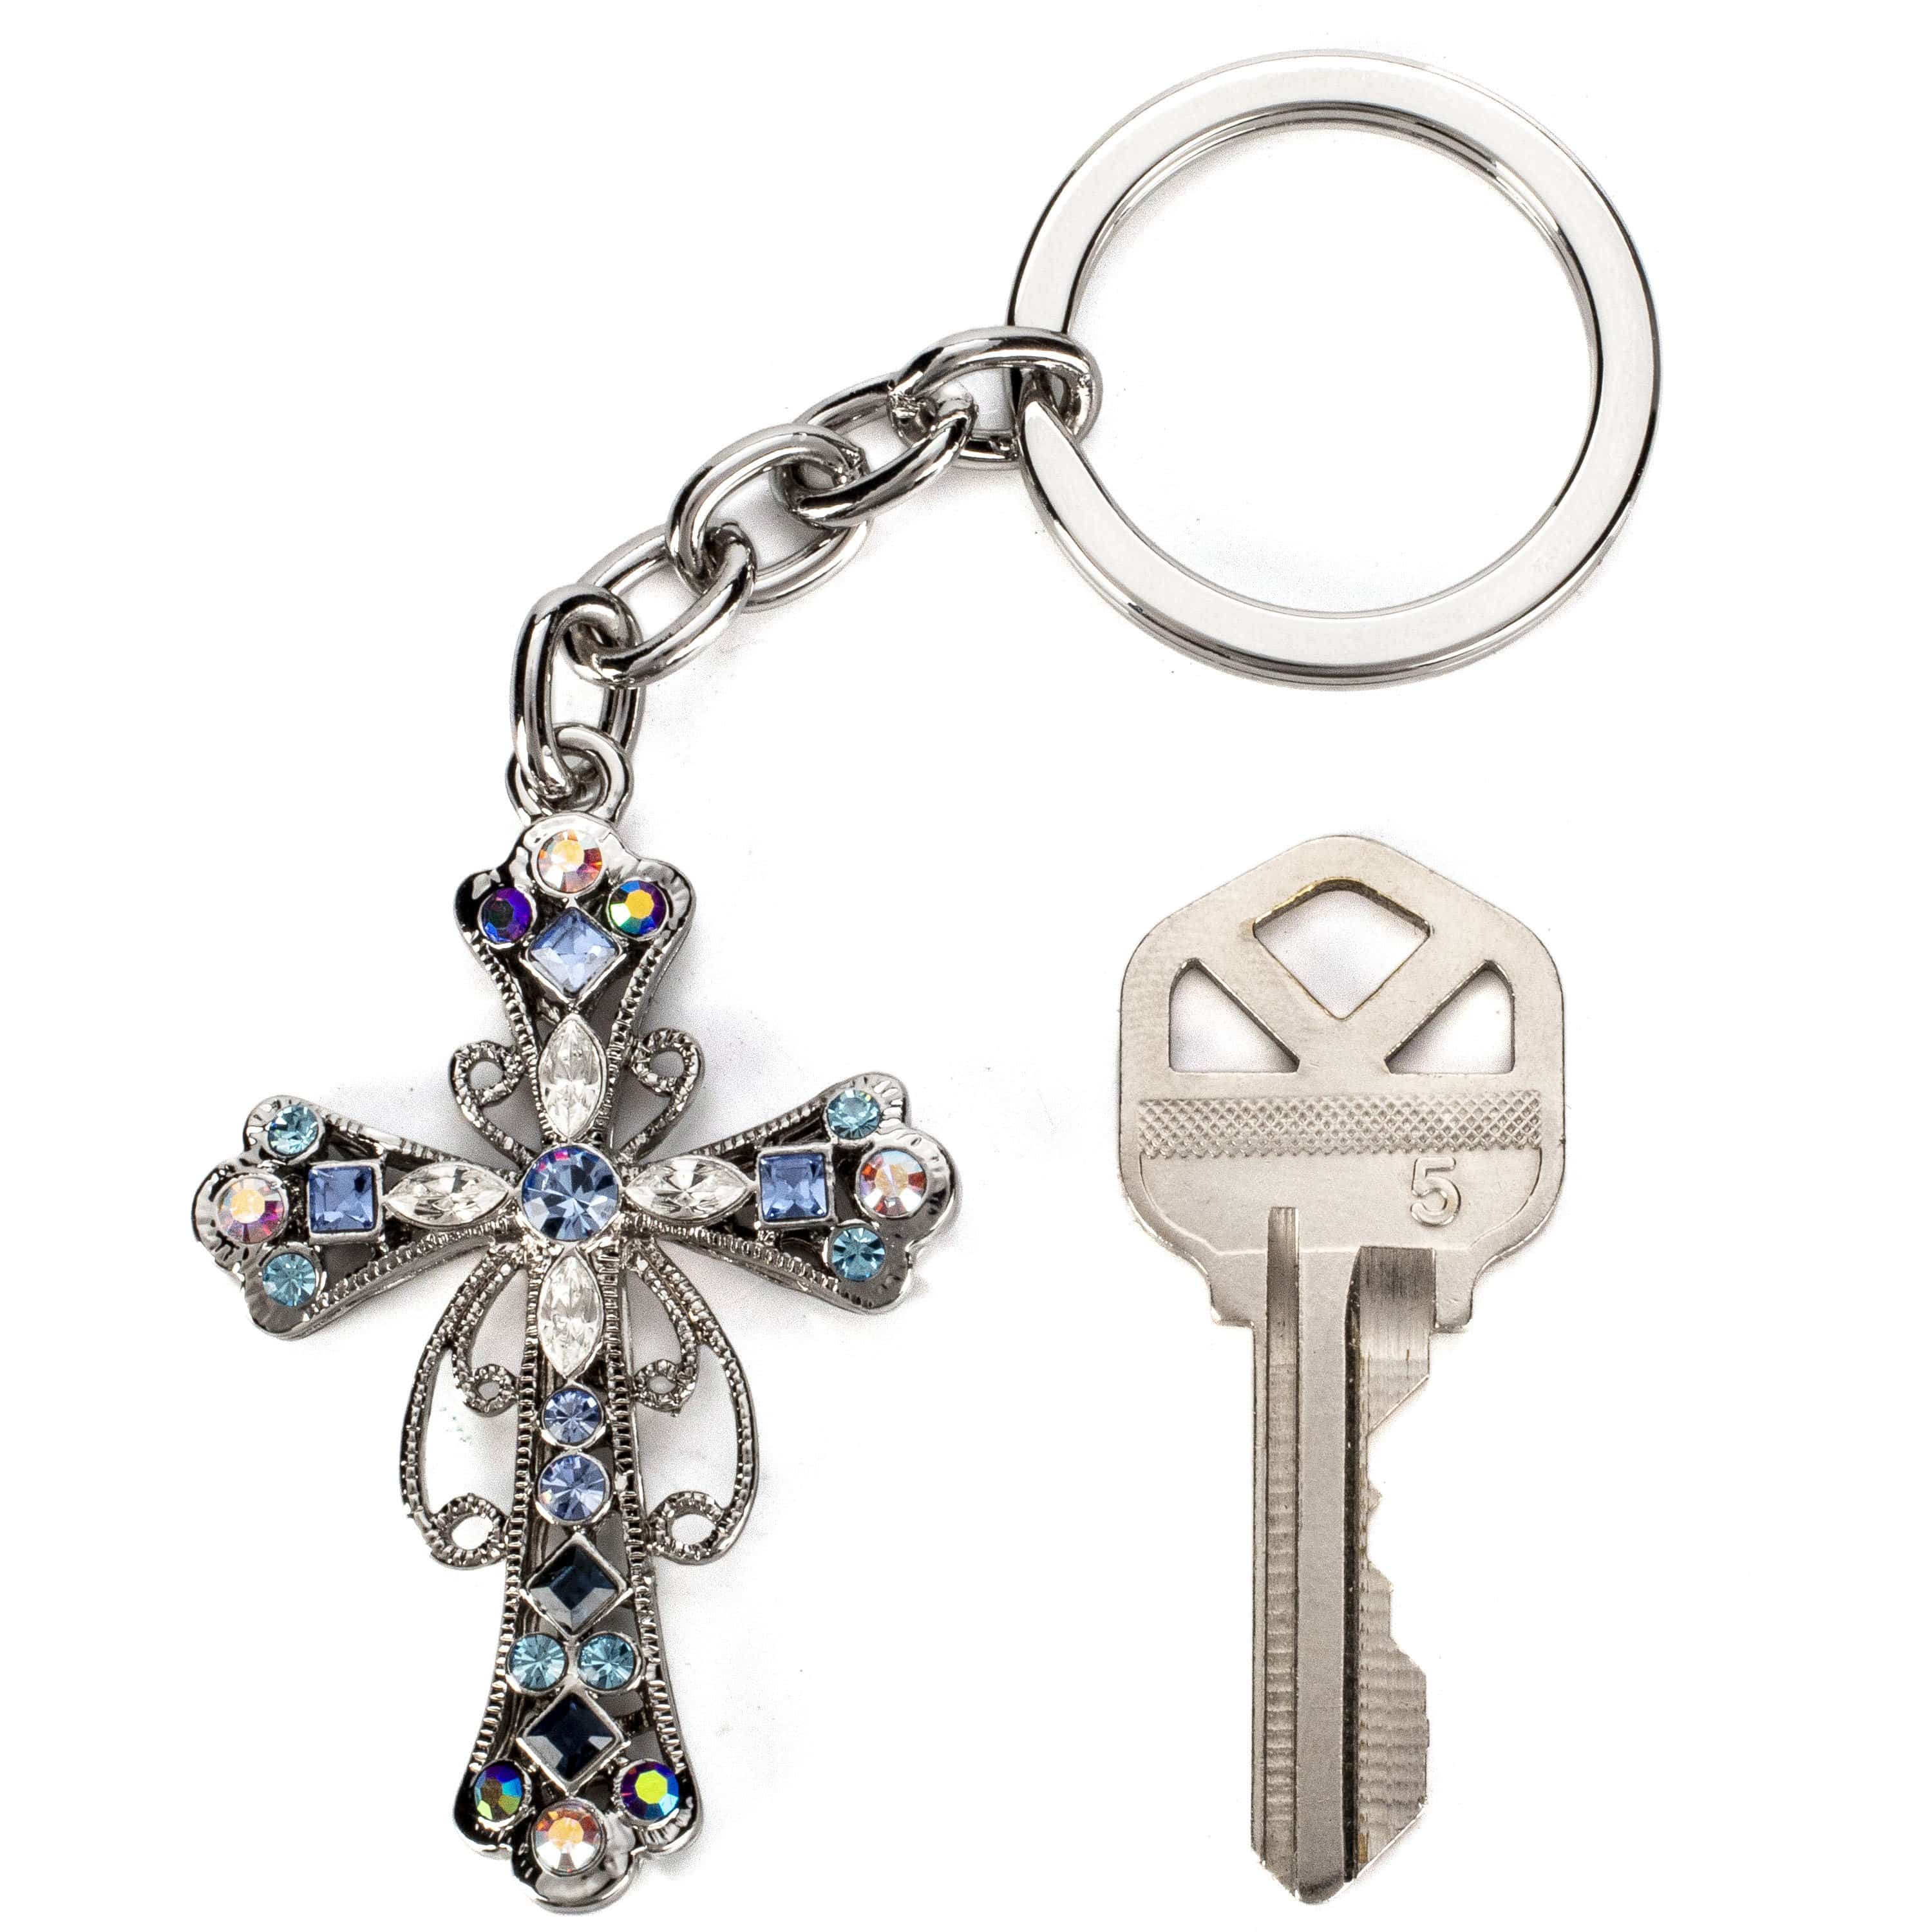 Kalifano Crystal Keychains Sapphire Cross Keychain made with Swarovski Crystals SKC-085